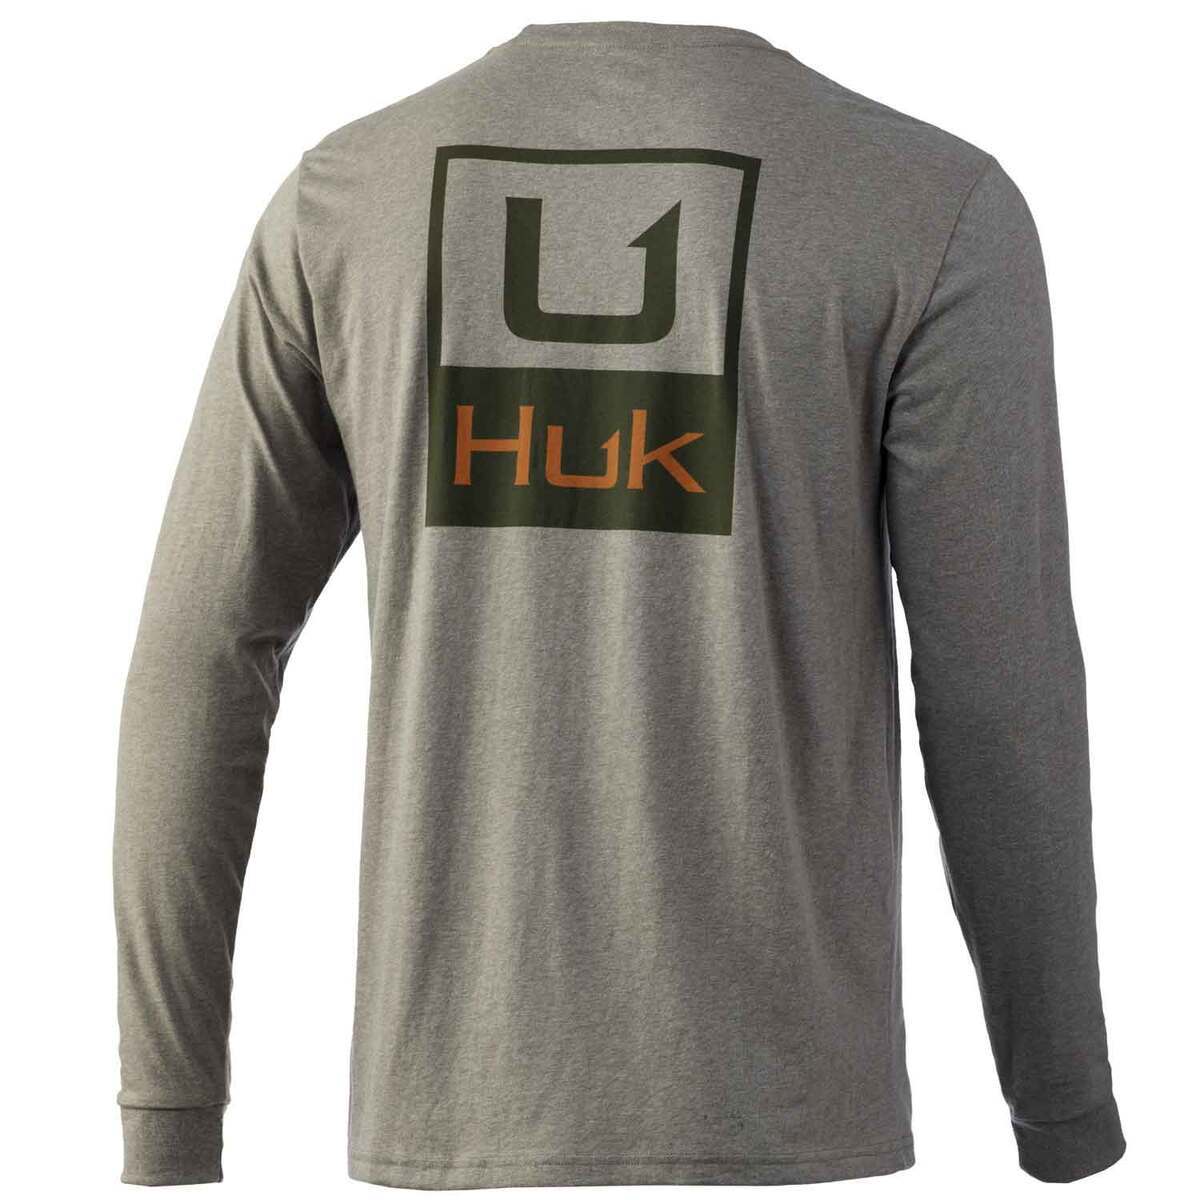 Huk Men's Brand Box Long Sleeve T-Shirt, Medium, Black